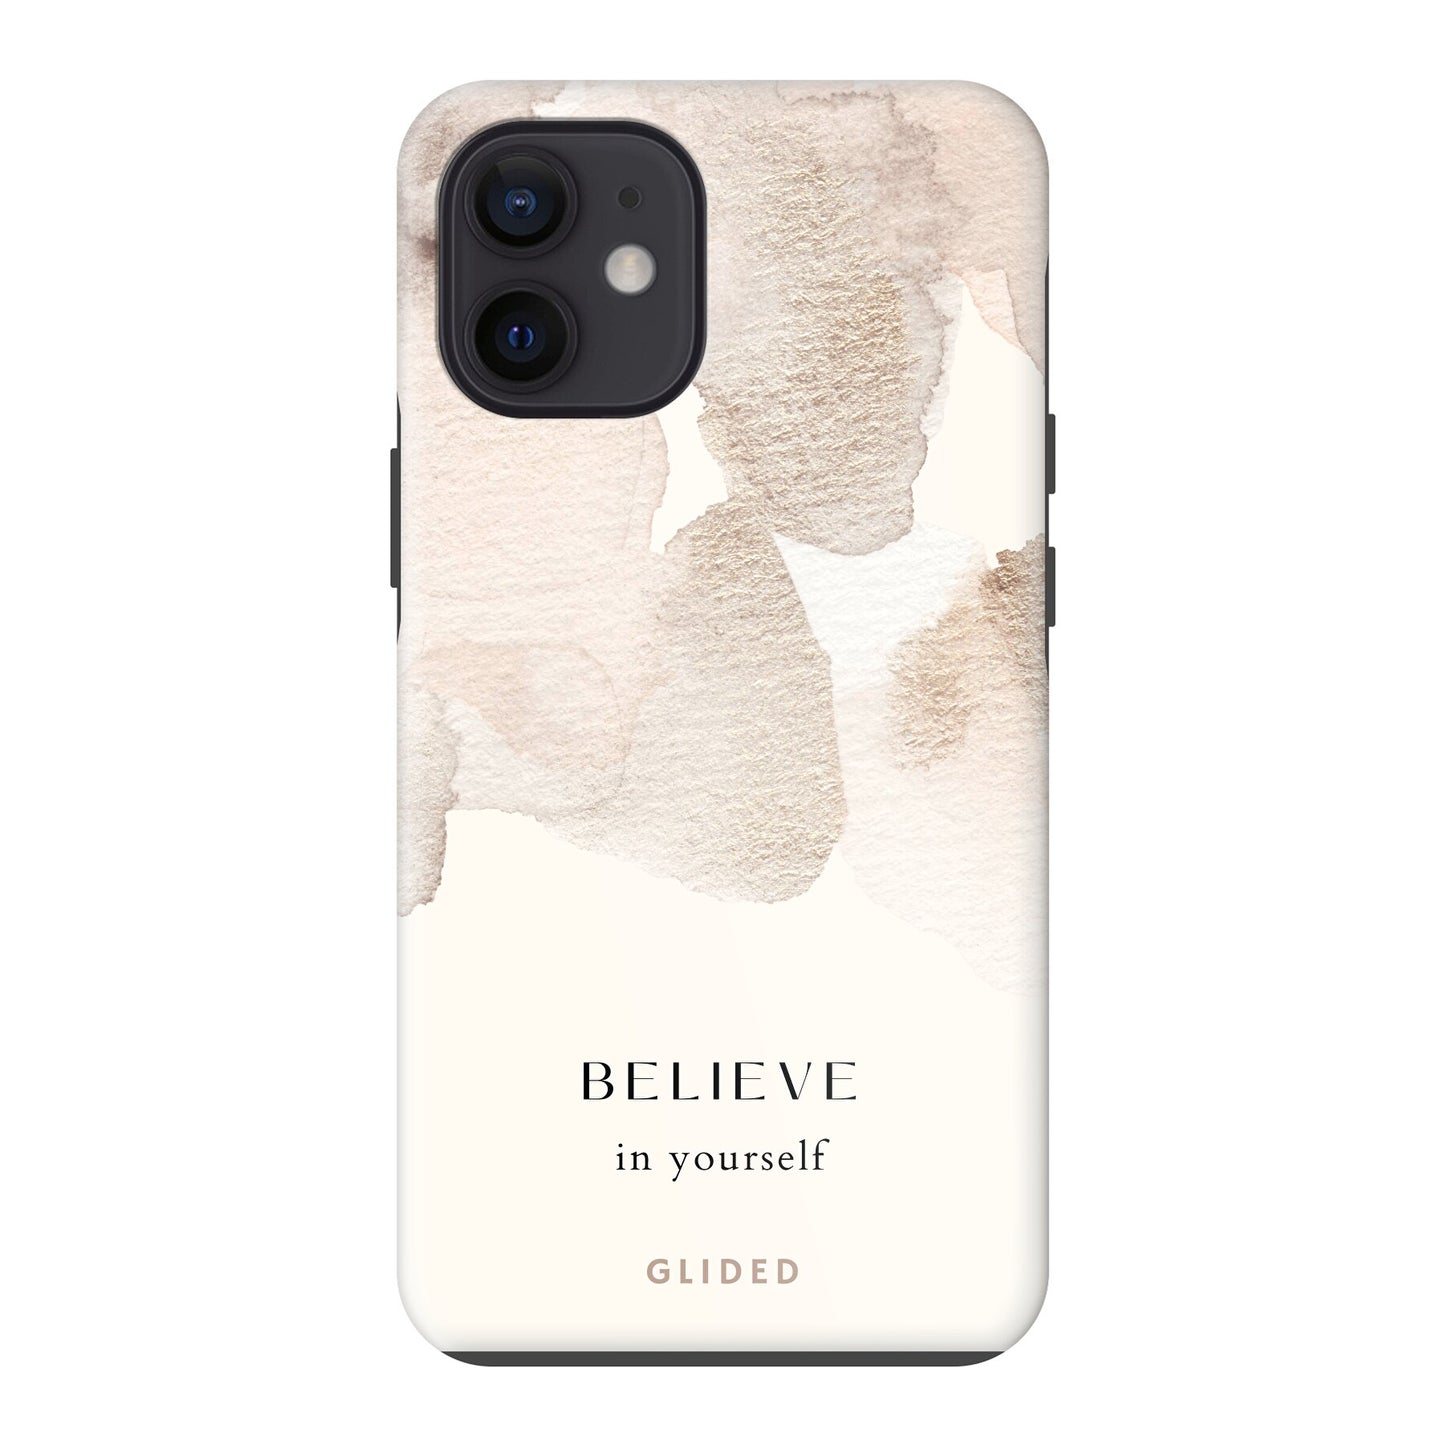 Believe in yourself - iPhone 12 mini Handyhülle Tough case